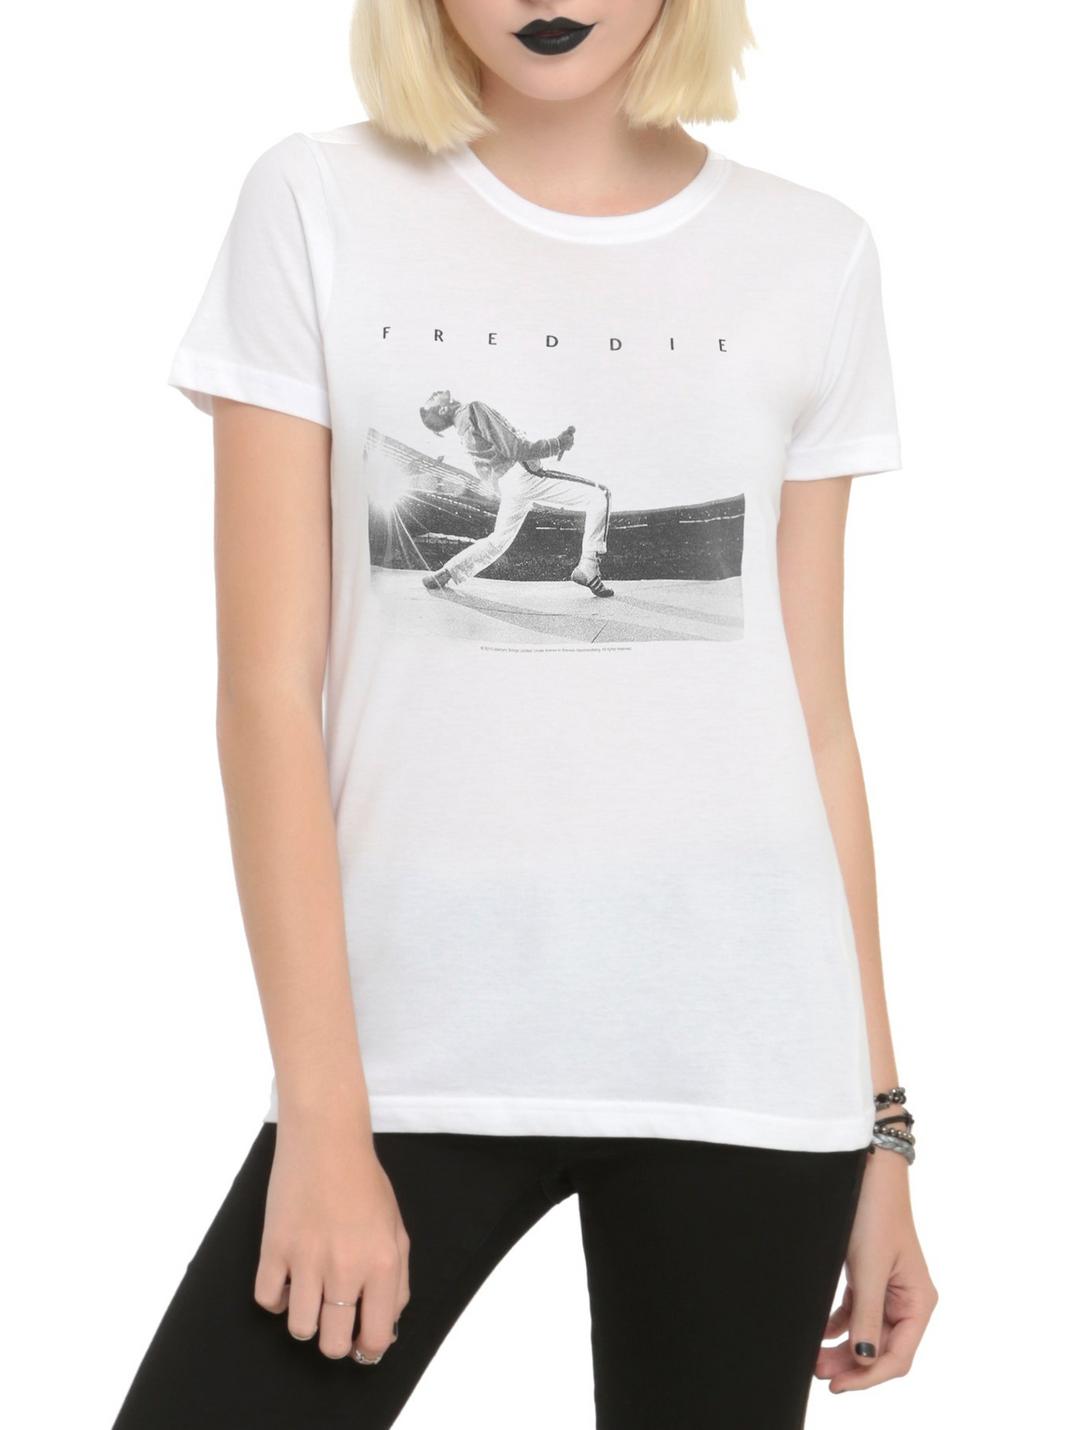 Queen Freddie On Stage Girls T-Shirt, WHITE, hi-res